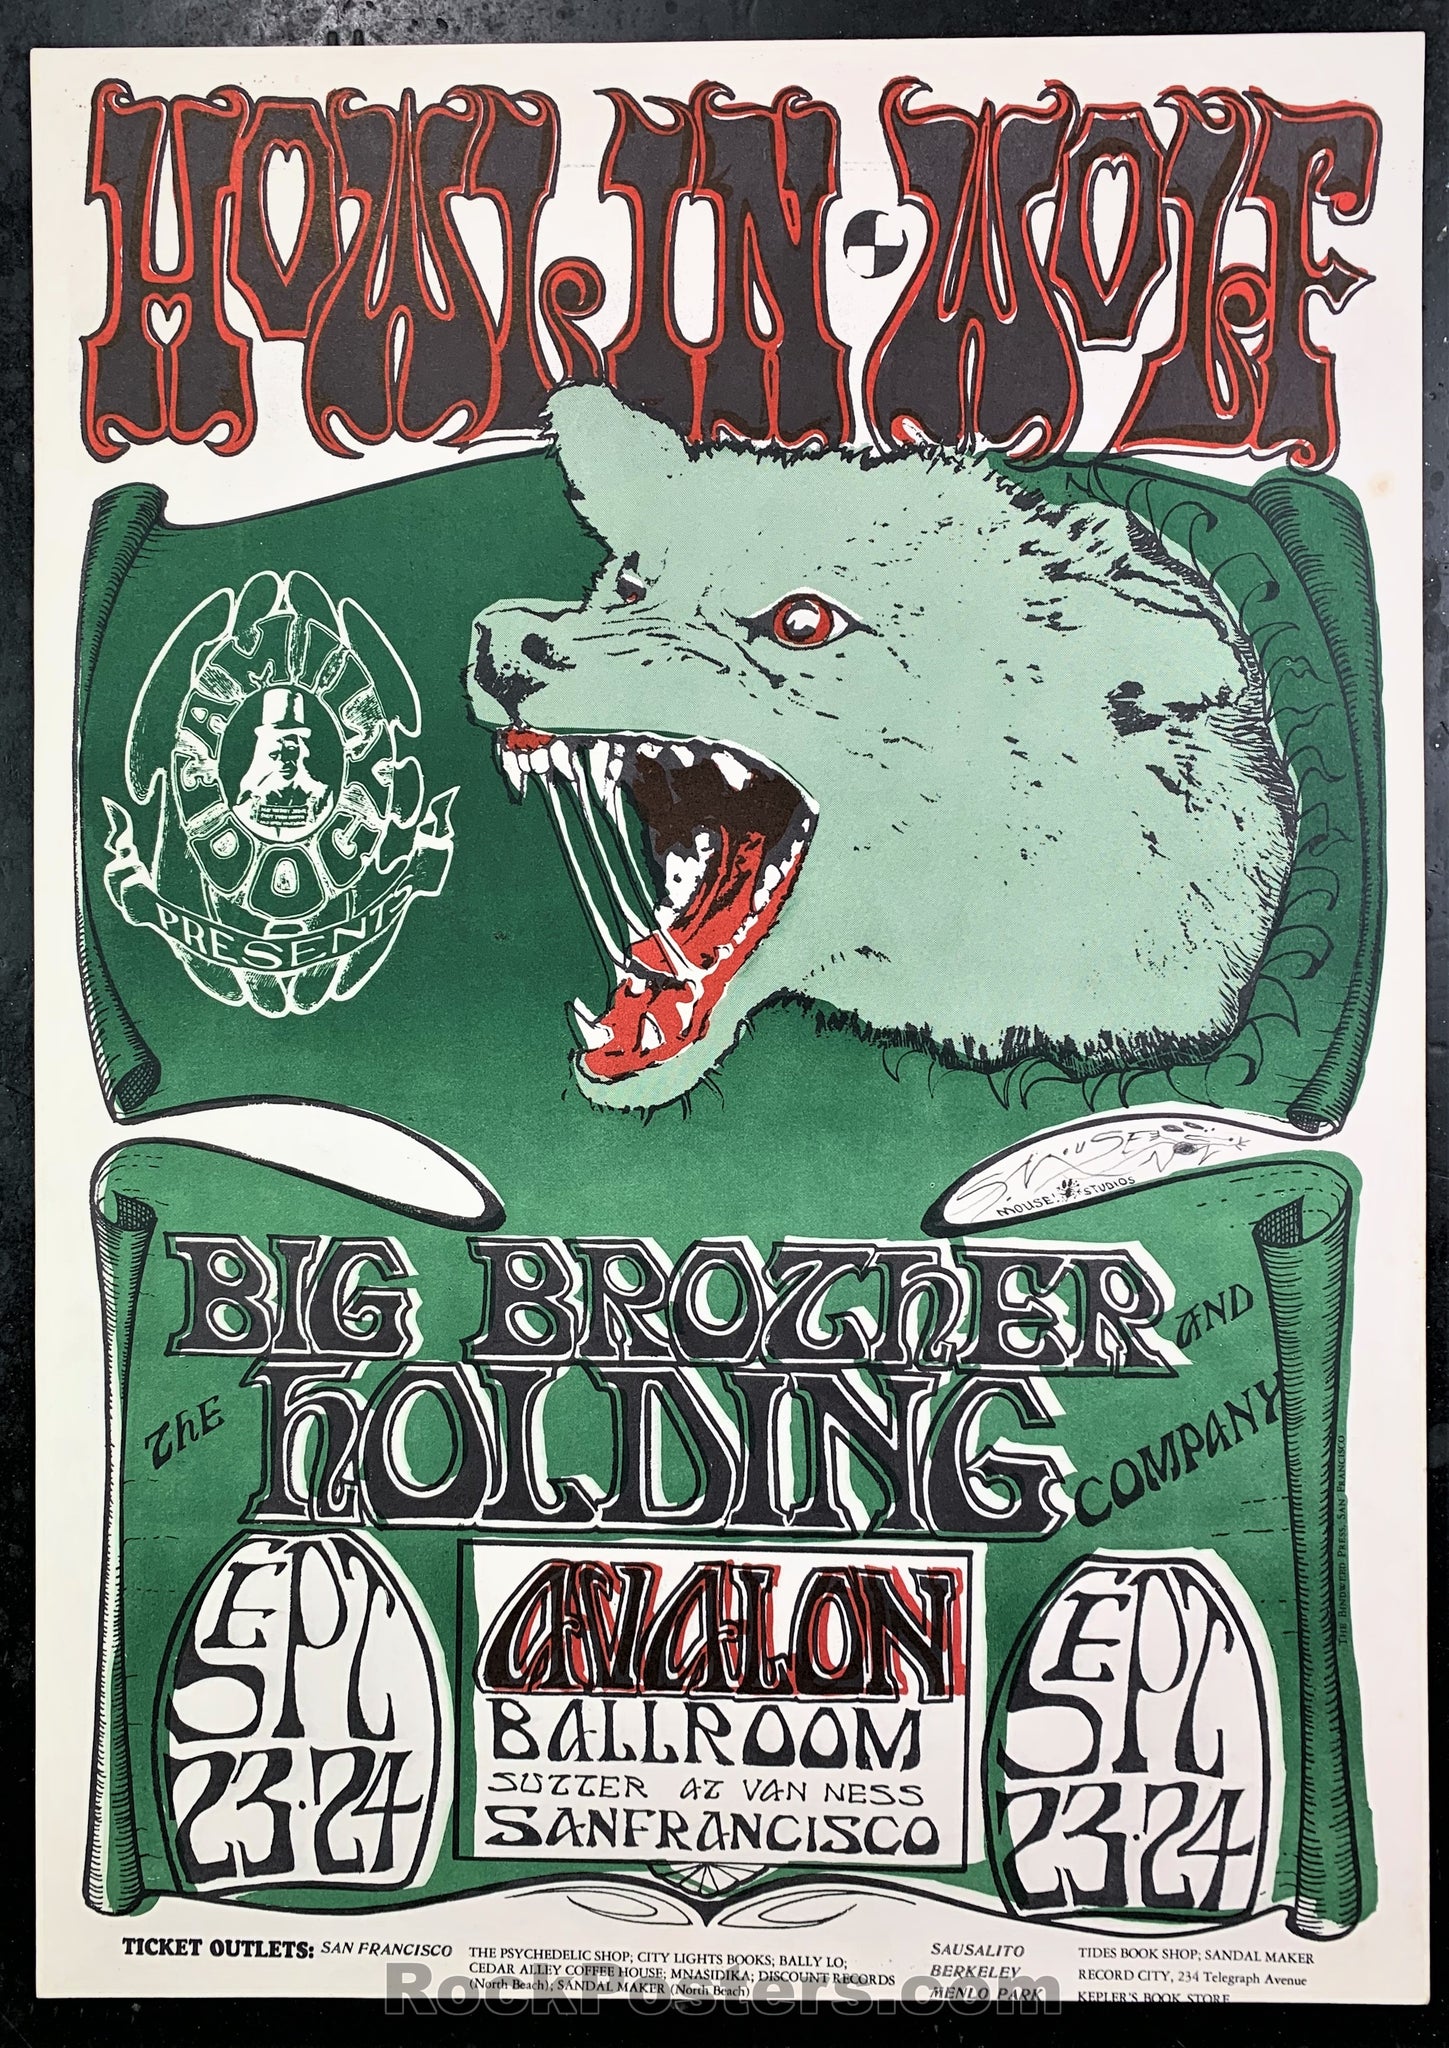 AUCTION - FD-27 - Howlin Wolf - Mouse Signed - 1966 Poster - Avalon Ballroom - Near Mint Minus